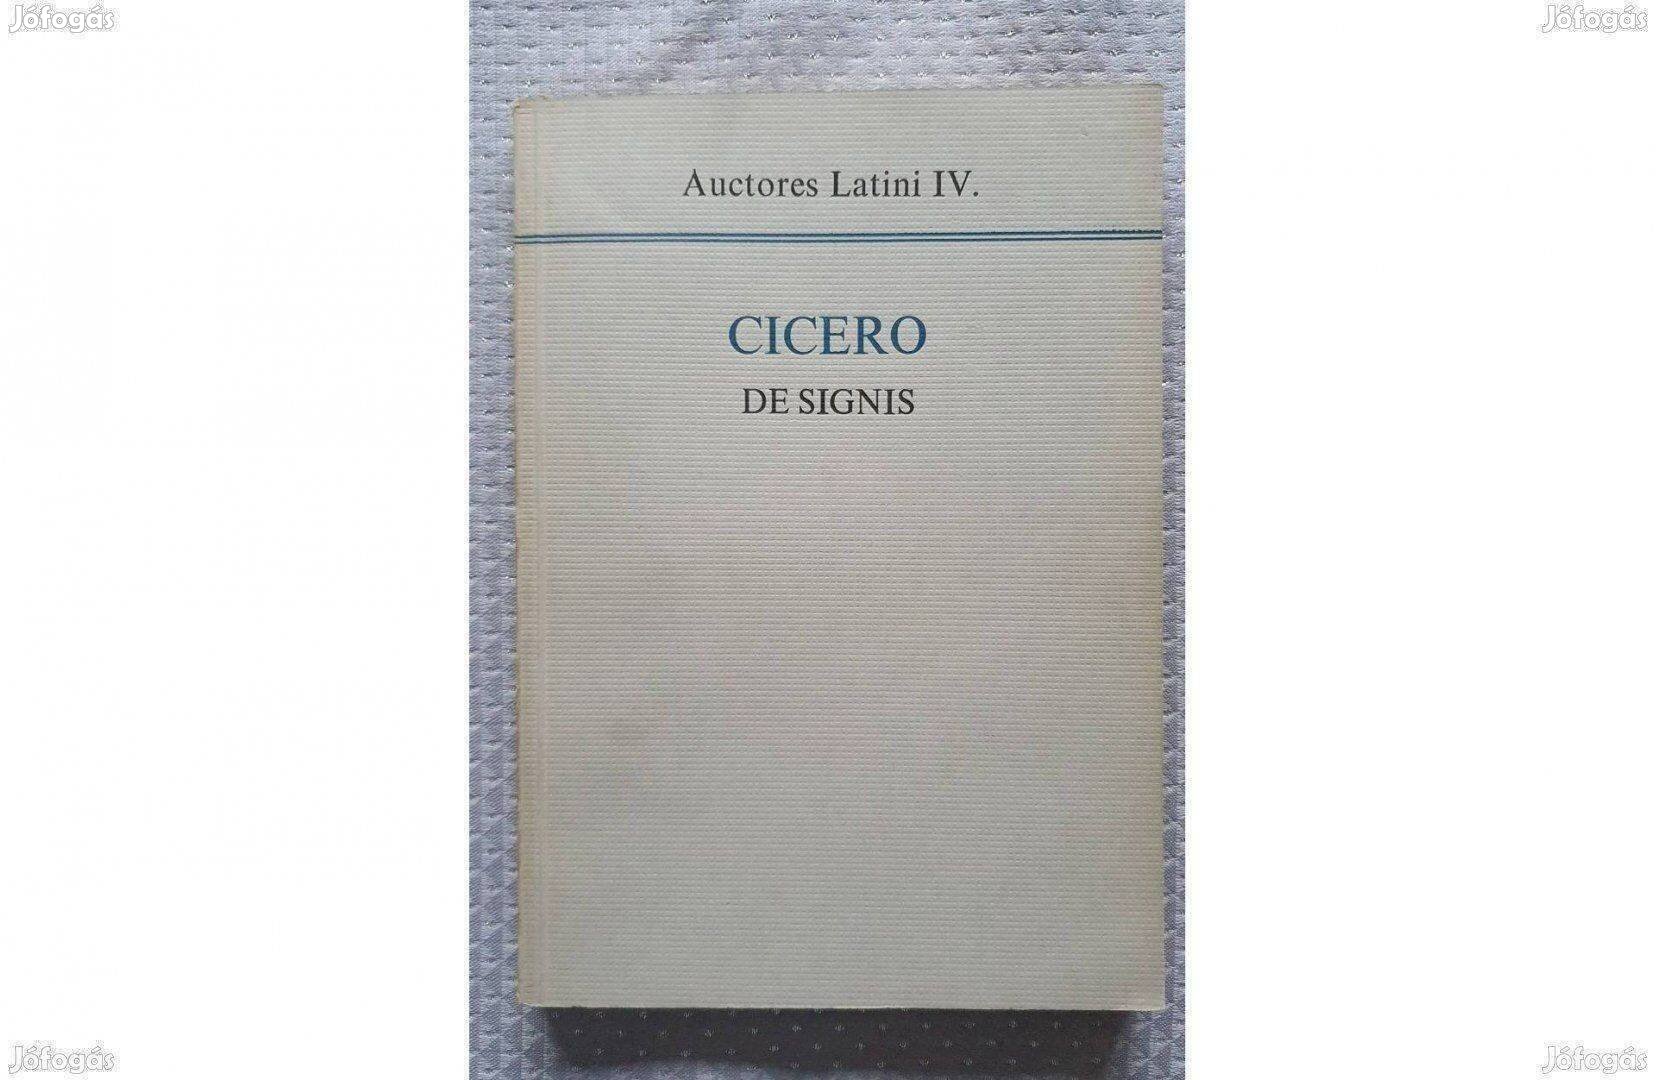 Latin nyelvű könyv: Cicero de signis/ Auctores Latini IV 1968